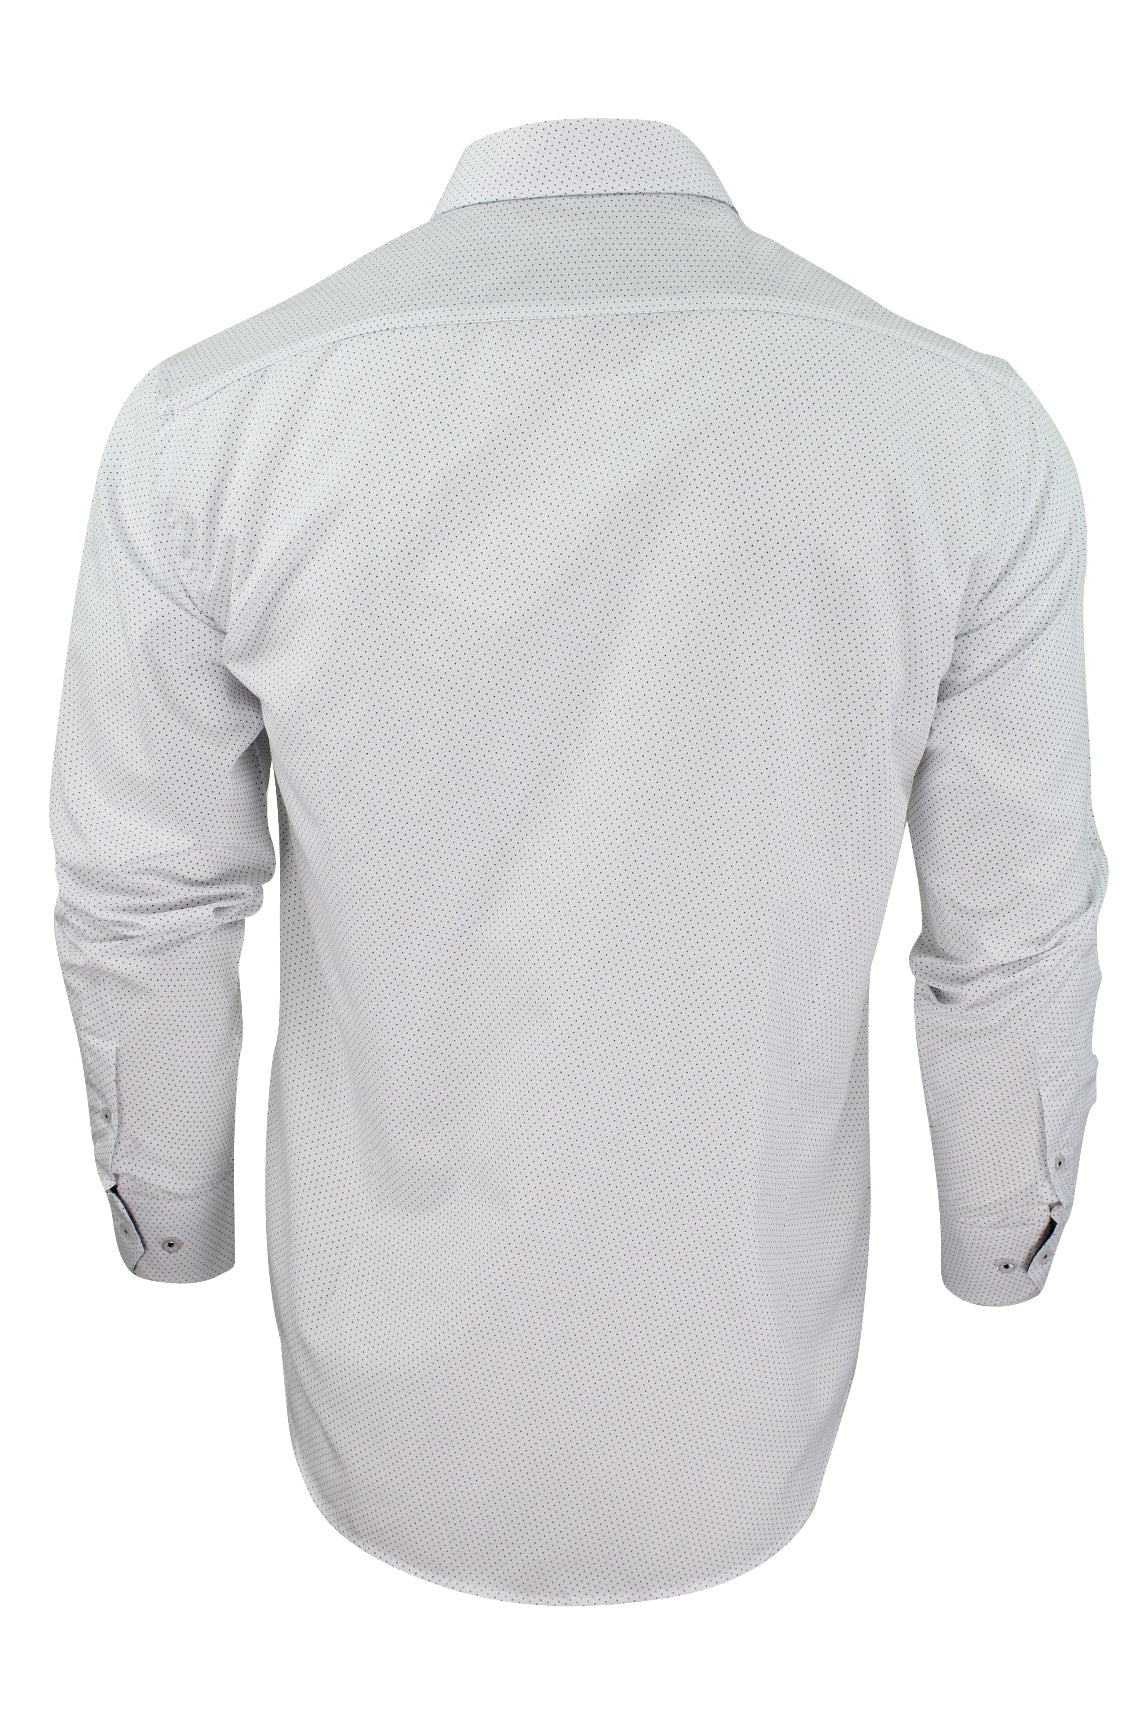 Mens Long Sleeved Shirt by Xact Clothing Mini Polka Dot, 03, 1510121, White